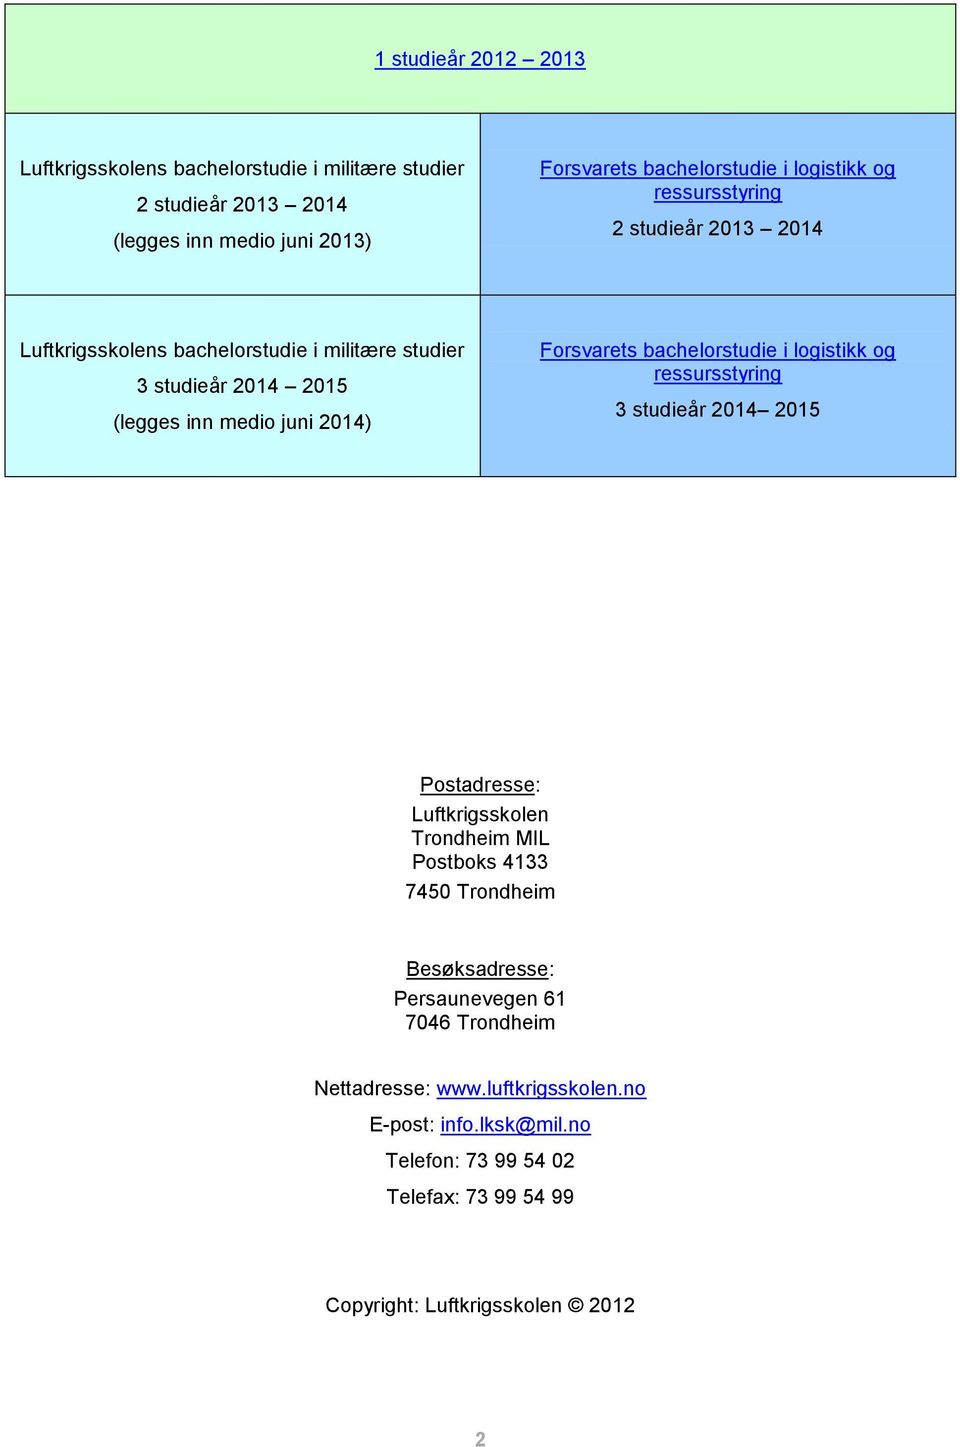 Forsvarets bachelorstudie i logistikk og ressursstyring 3 studieår 2014 2015 Postadresse: Luftkrigsskolen Trondheim MIL Postboks 4133 7450 Trondheim